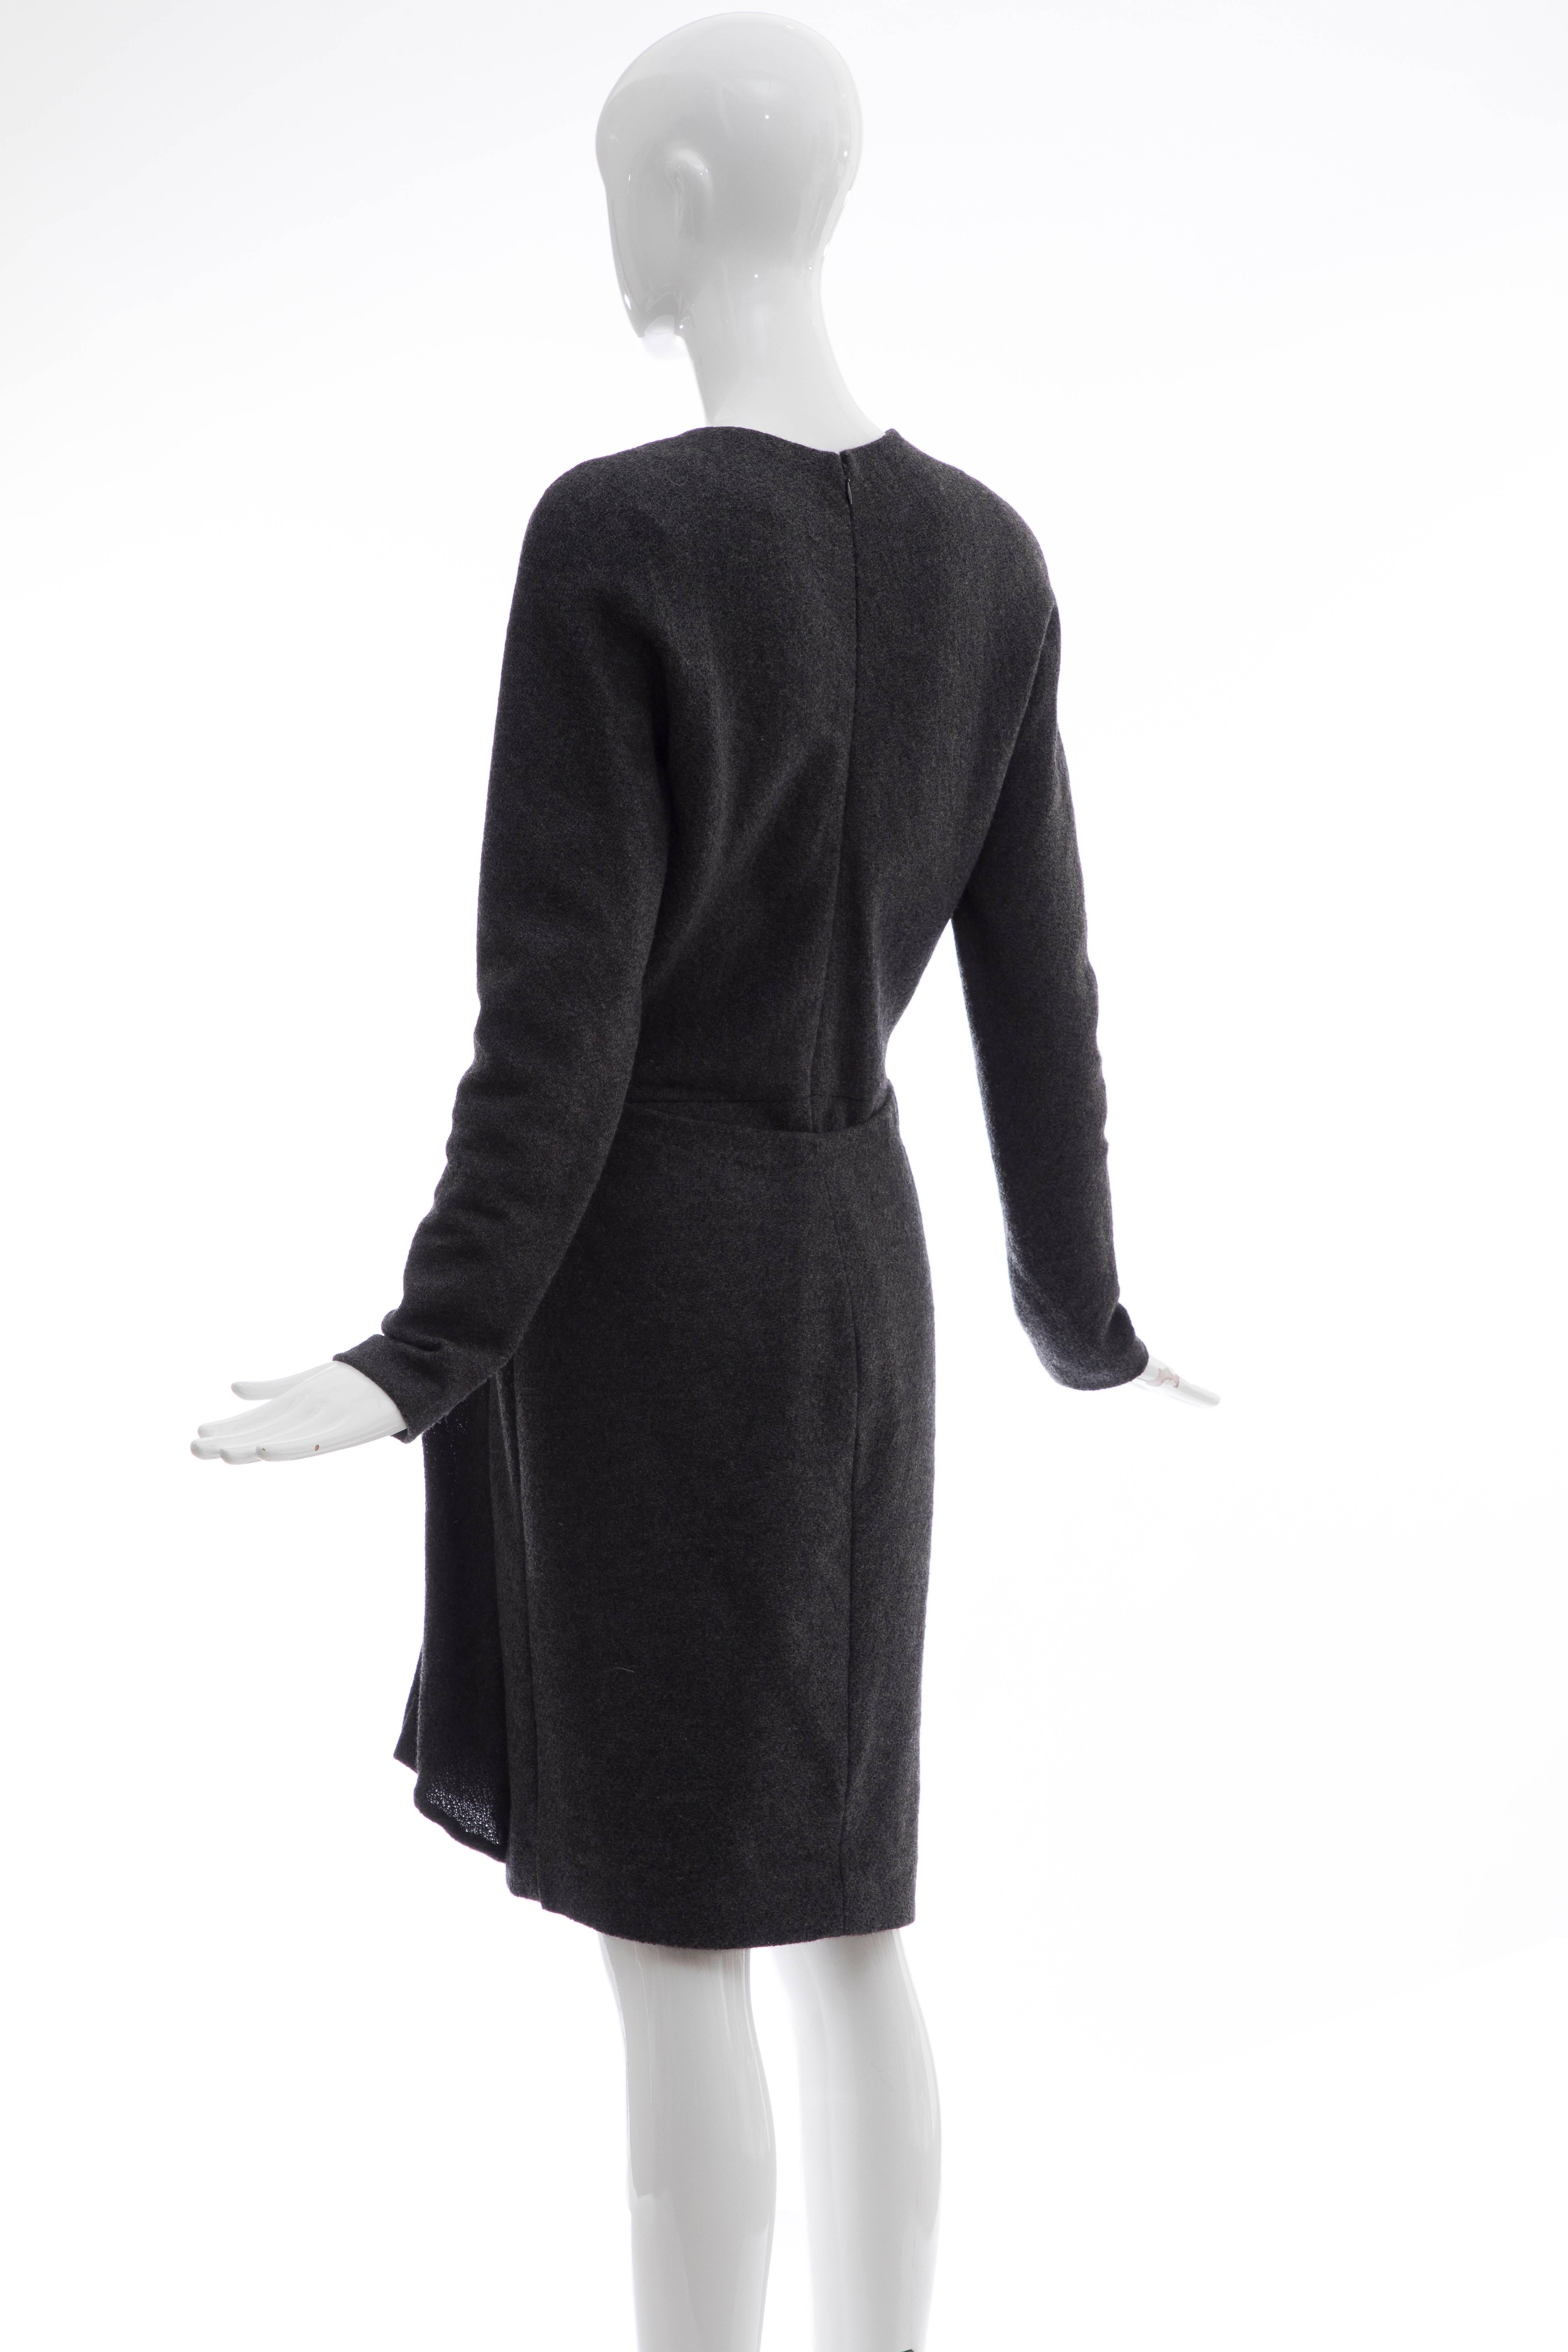 Donna Karan Charcoal Grey Alpaca Wool Crepe Jersey Wrap Dress,  Circa 1980's In Excellent Condition For Sale In Cincinnati, OH